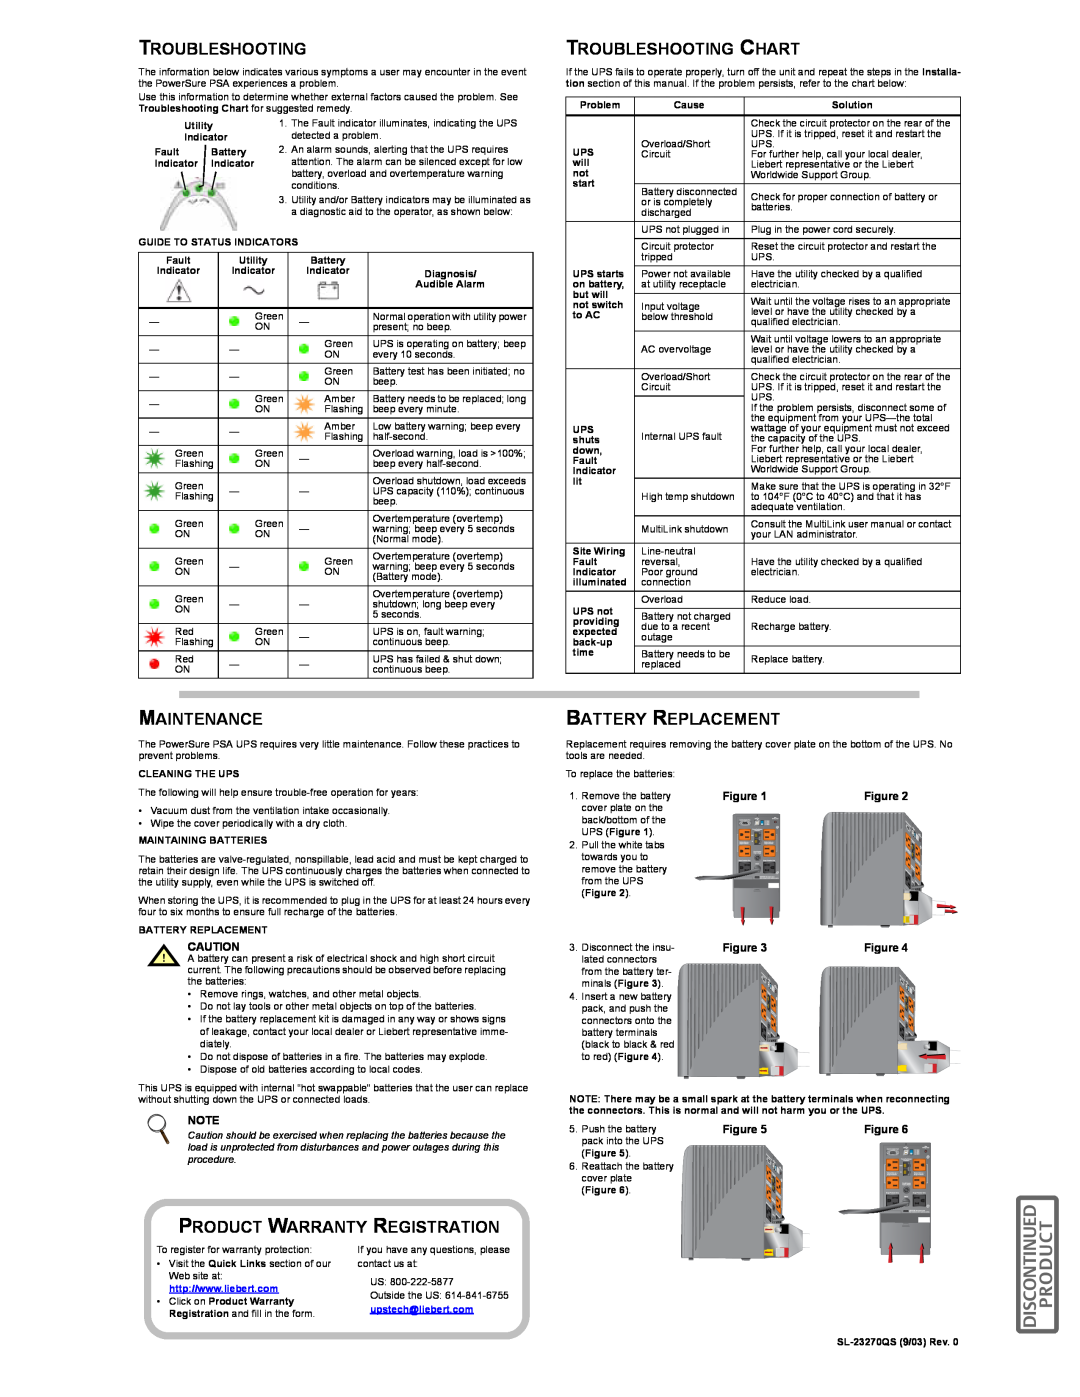 Liebert PSA1000MT-120, 350 Troubleshooting Chart, Maintenance, Product Warranty Registration, Battery Replacement 